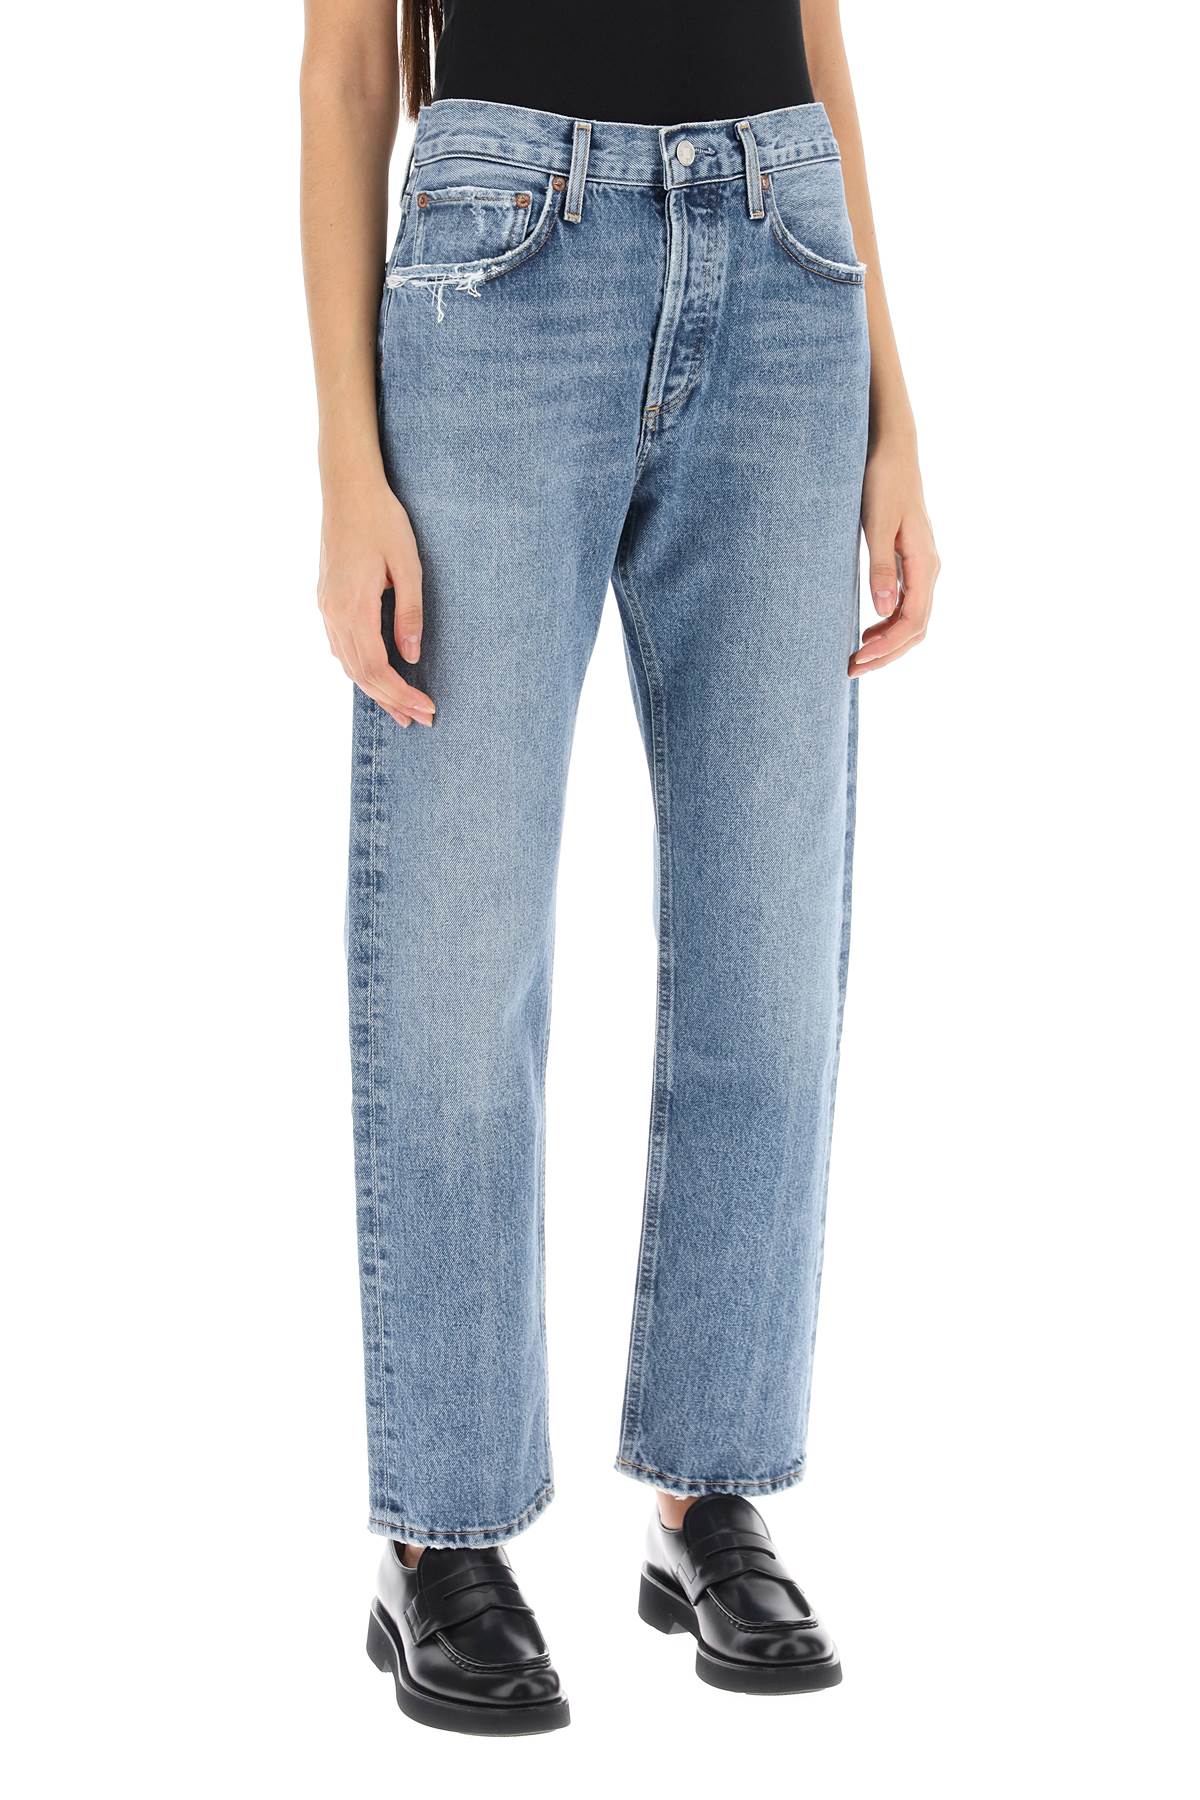 Agolde parker cropped jeans-1